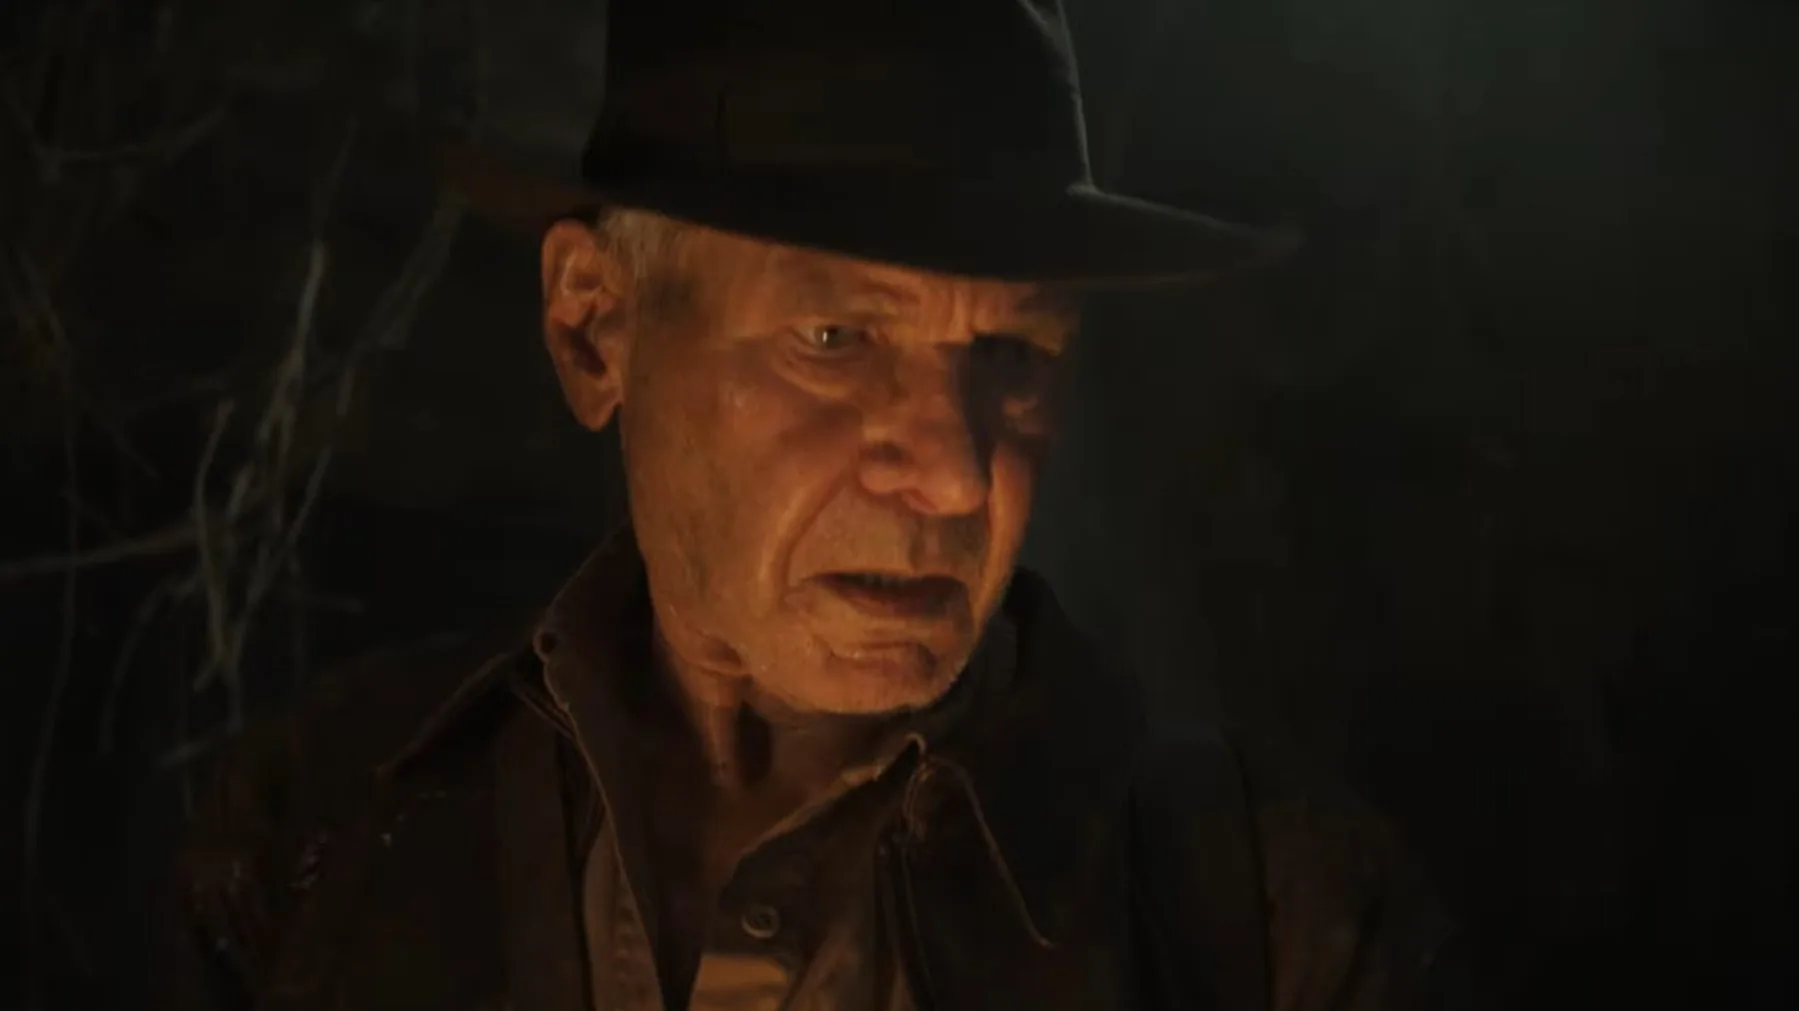 Indiana Jones 5 Video Showcases Series’ Global Legacy